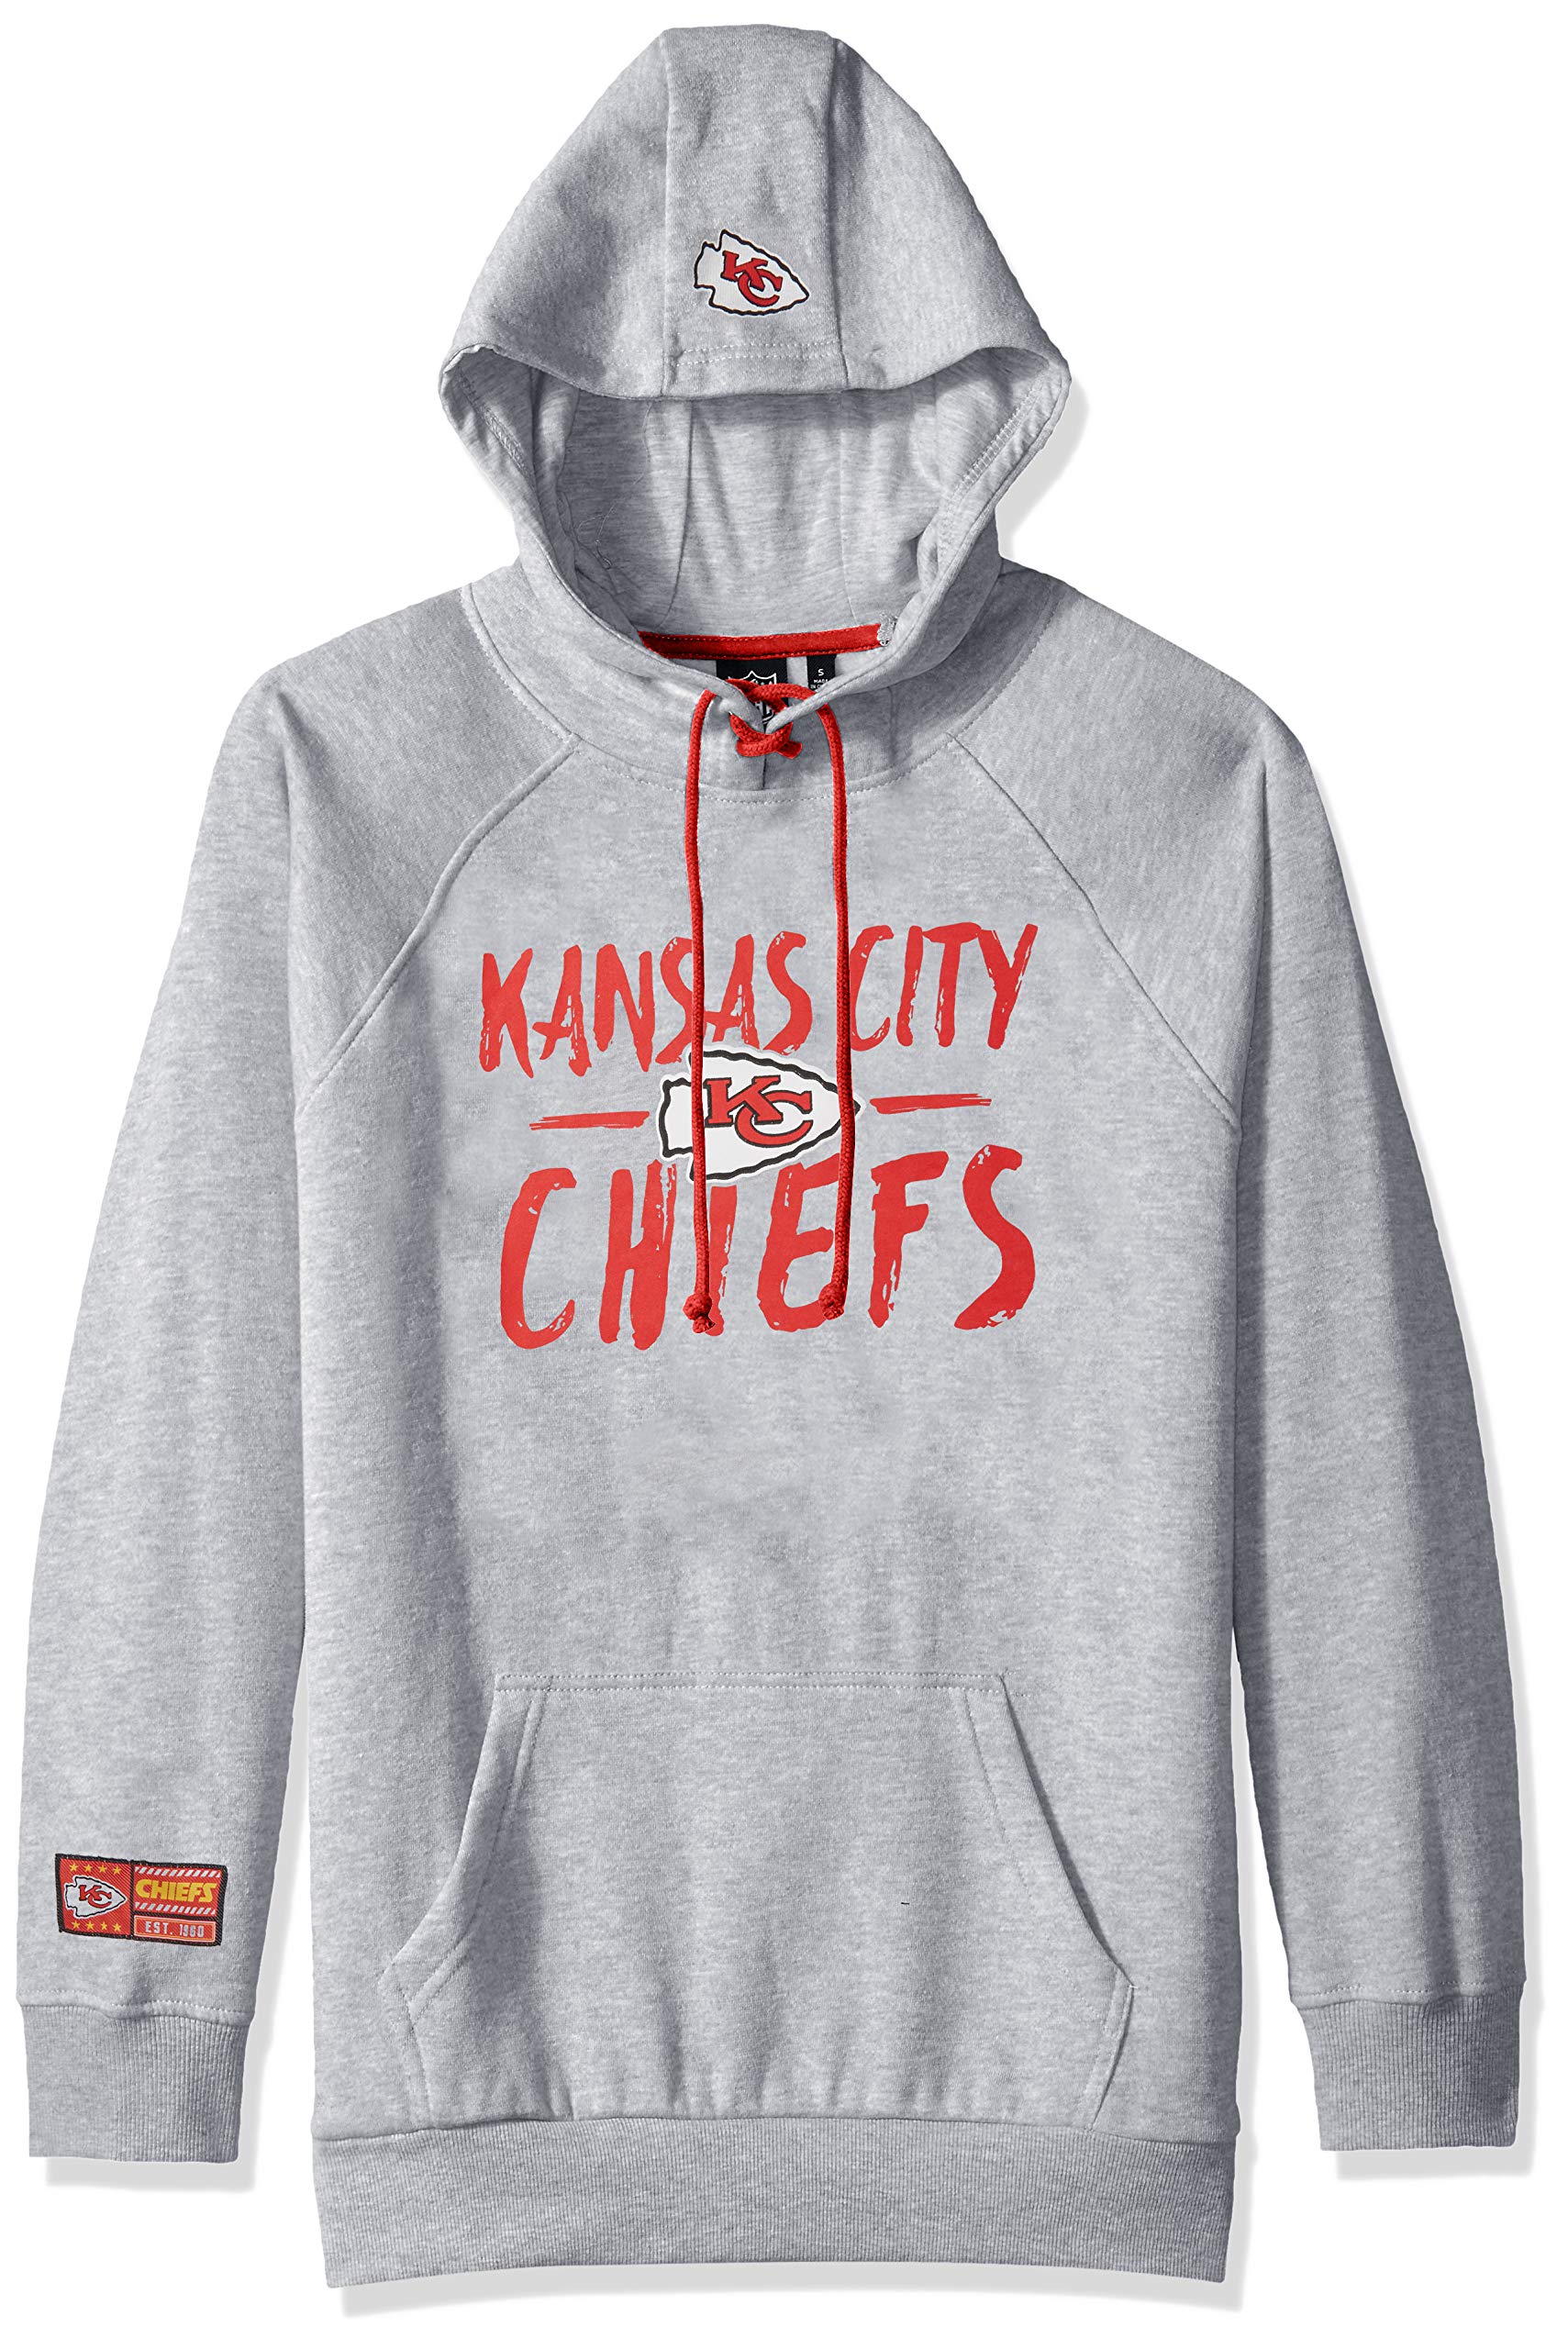 Ultra Game NFL Kansas City Chiefs Womens Fleece Hoodie Pullover Sweatshirt Tie Neck|Kansas City Chiefs - UltraGameShop